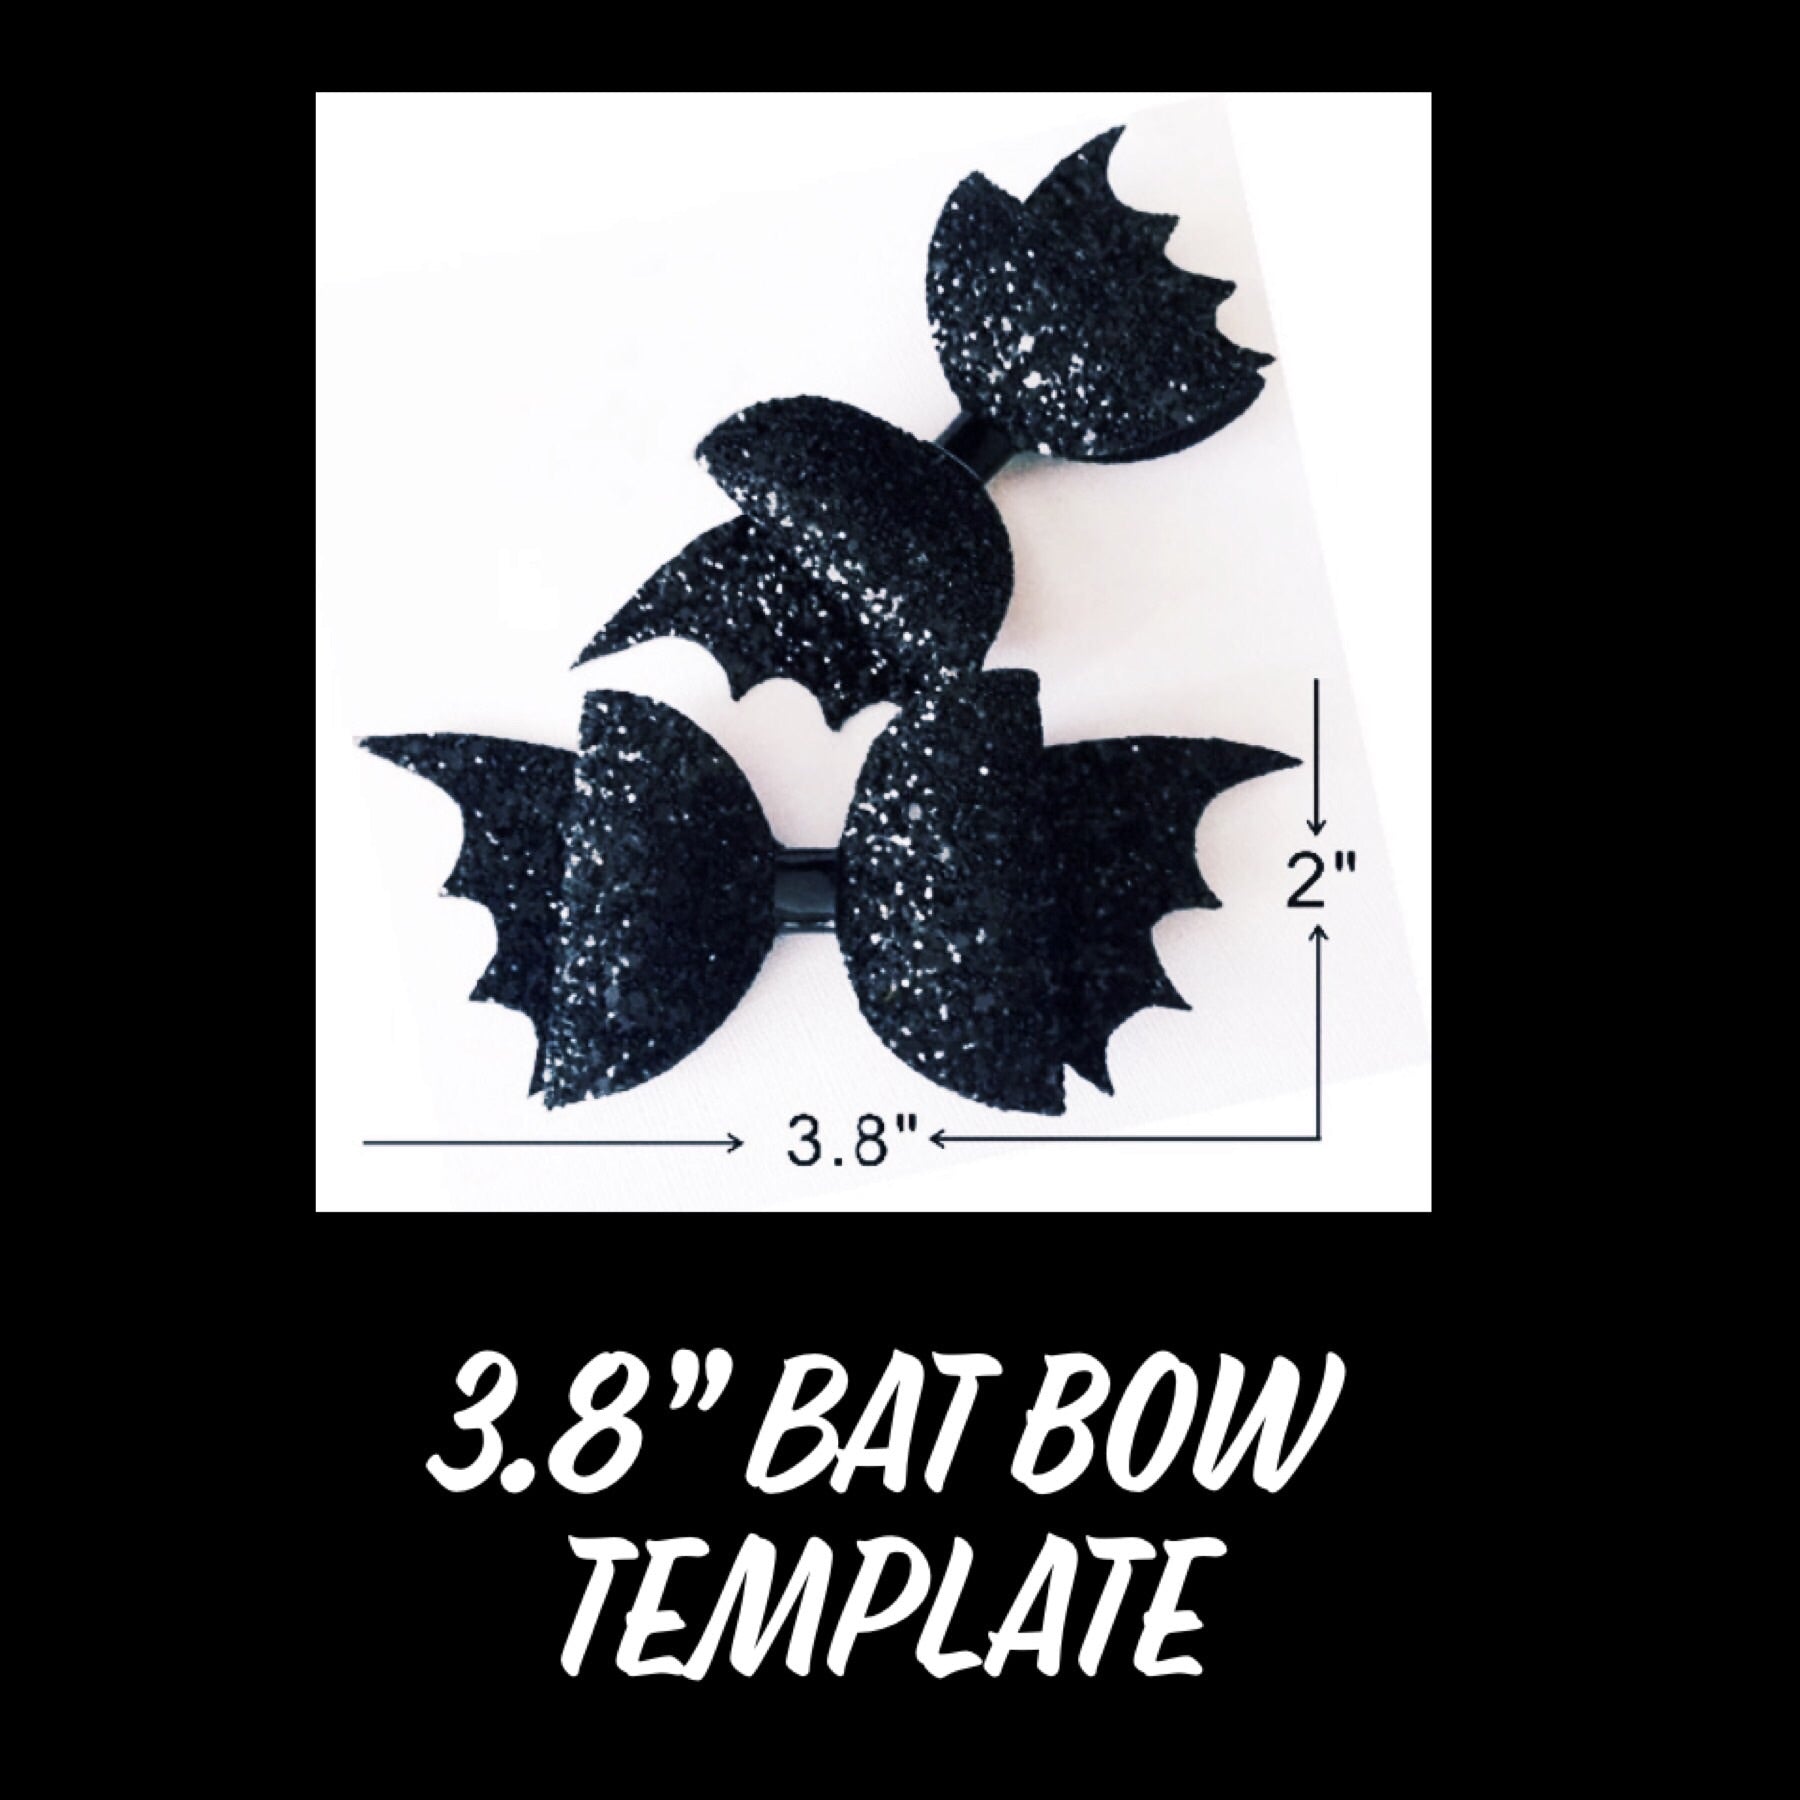 Bat bow Template 3.8” Rainbow craft supplies